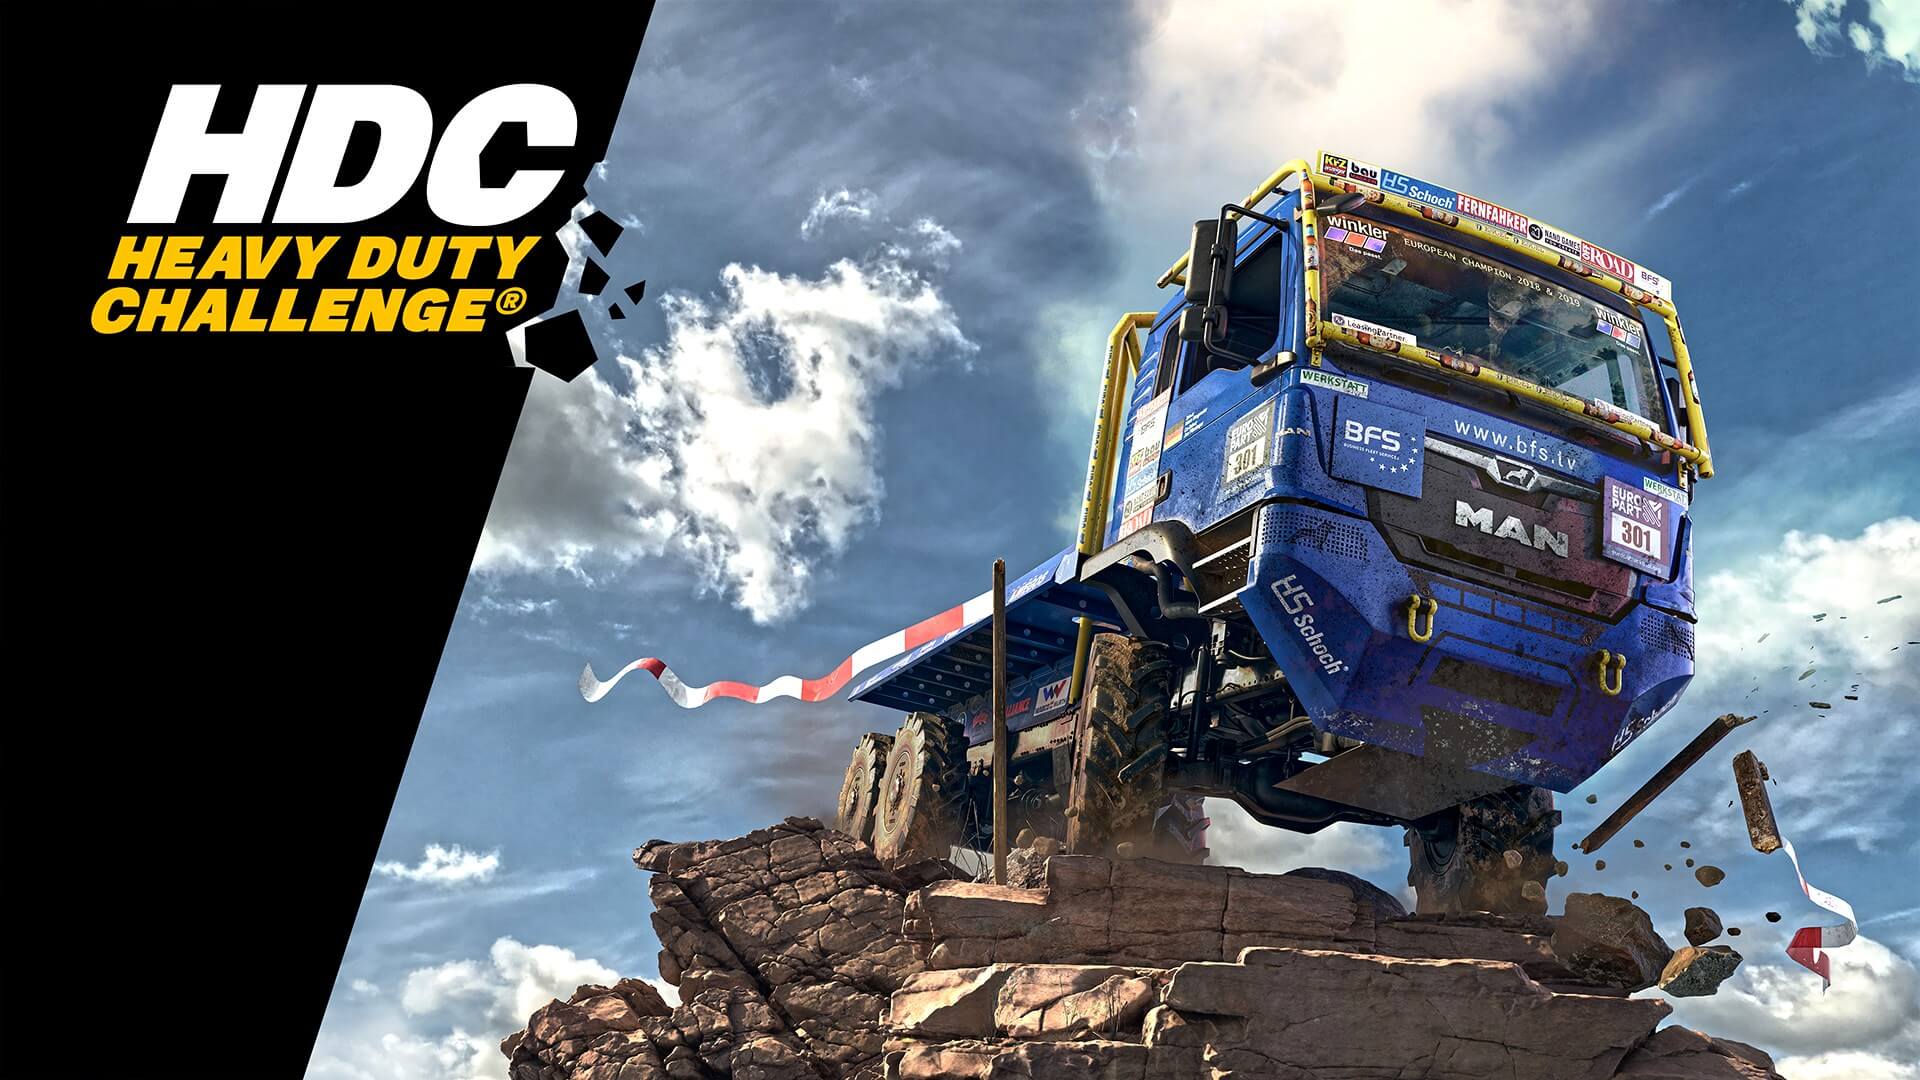 Offroad Truck Simulator: Heavy Duty Challenge®